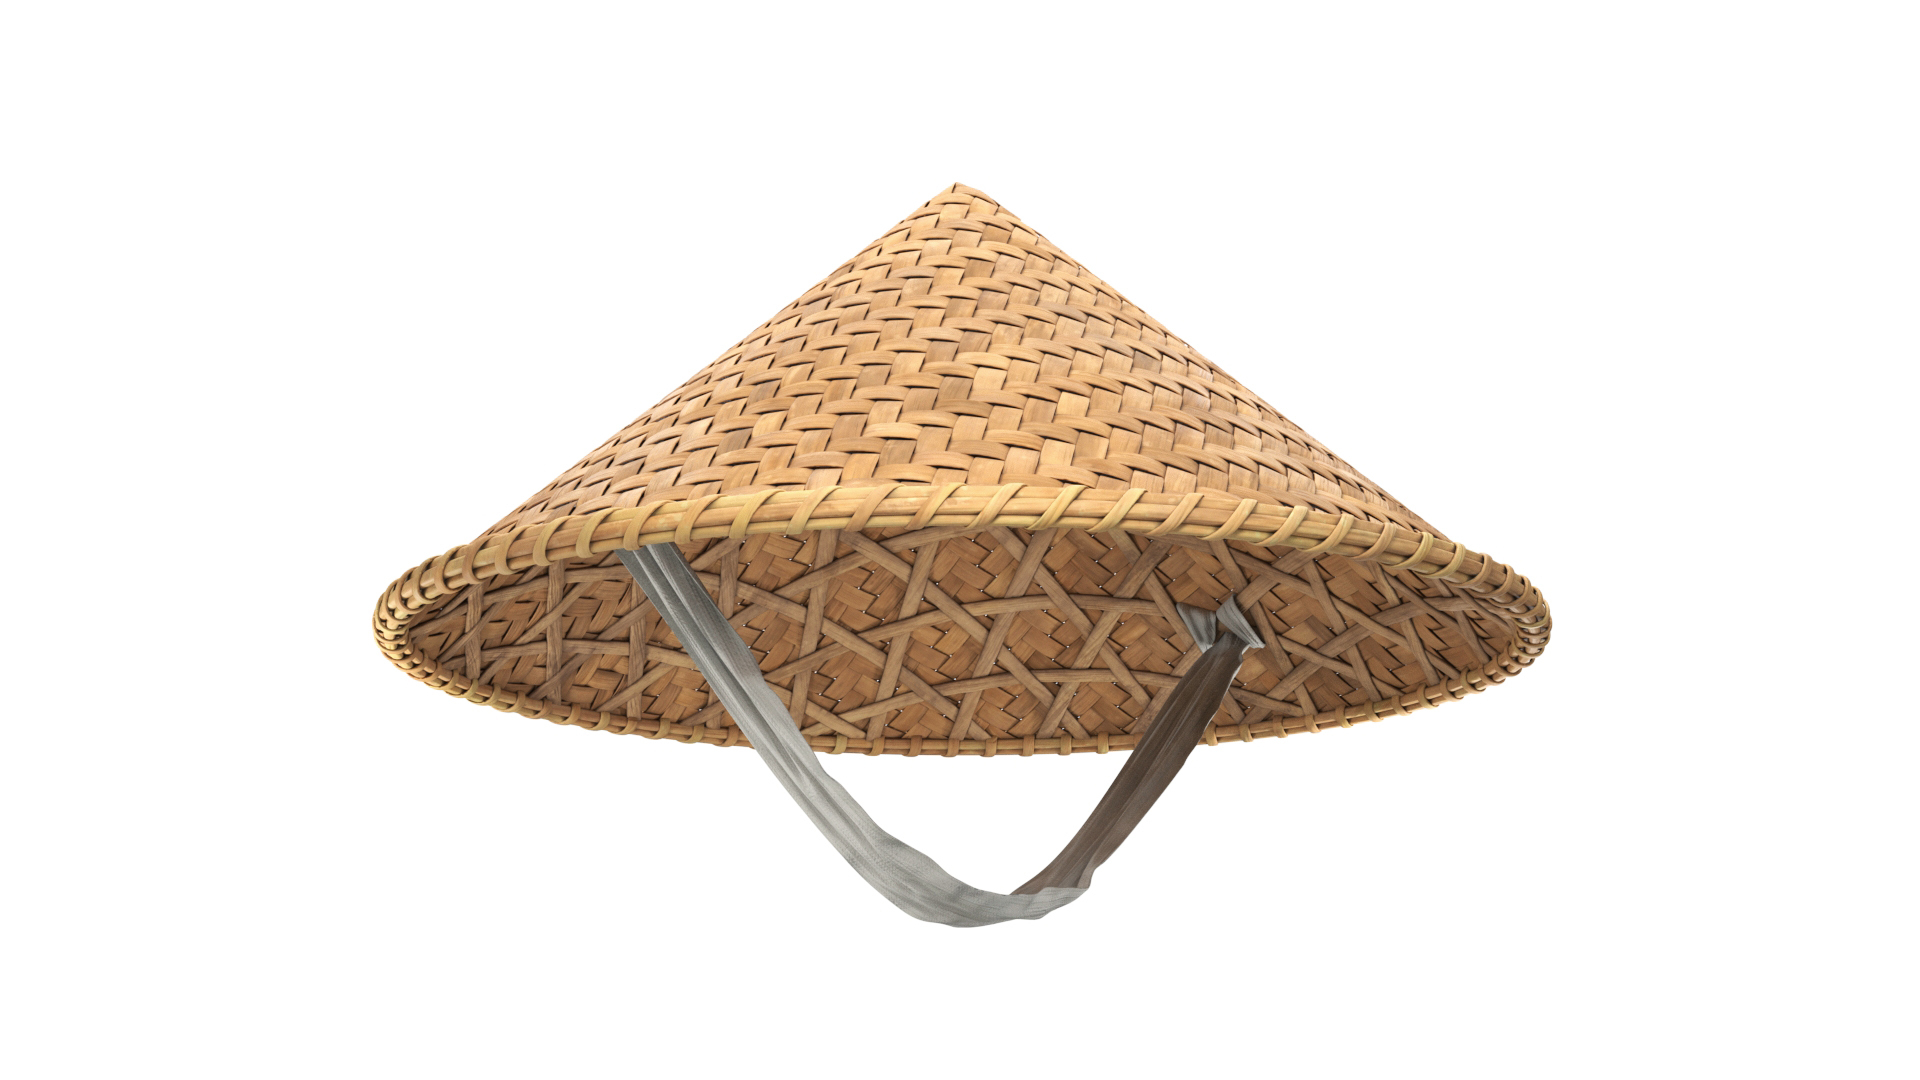 Bamboo hat. Шляпа амигаса бамбуковая. Бамбуковая шляпа доули. Коническая бамбуковая шляпа.